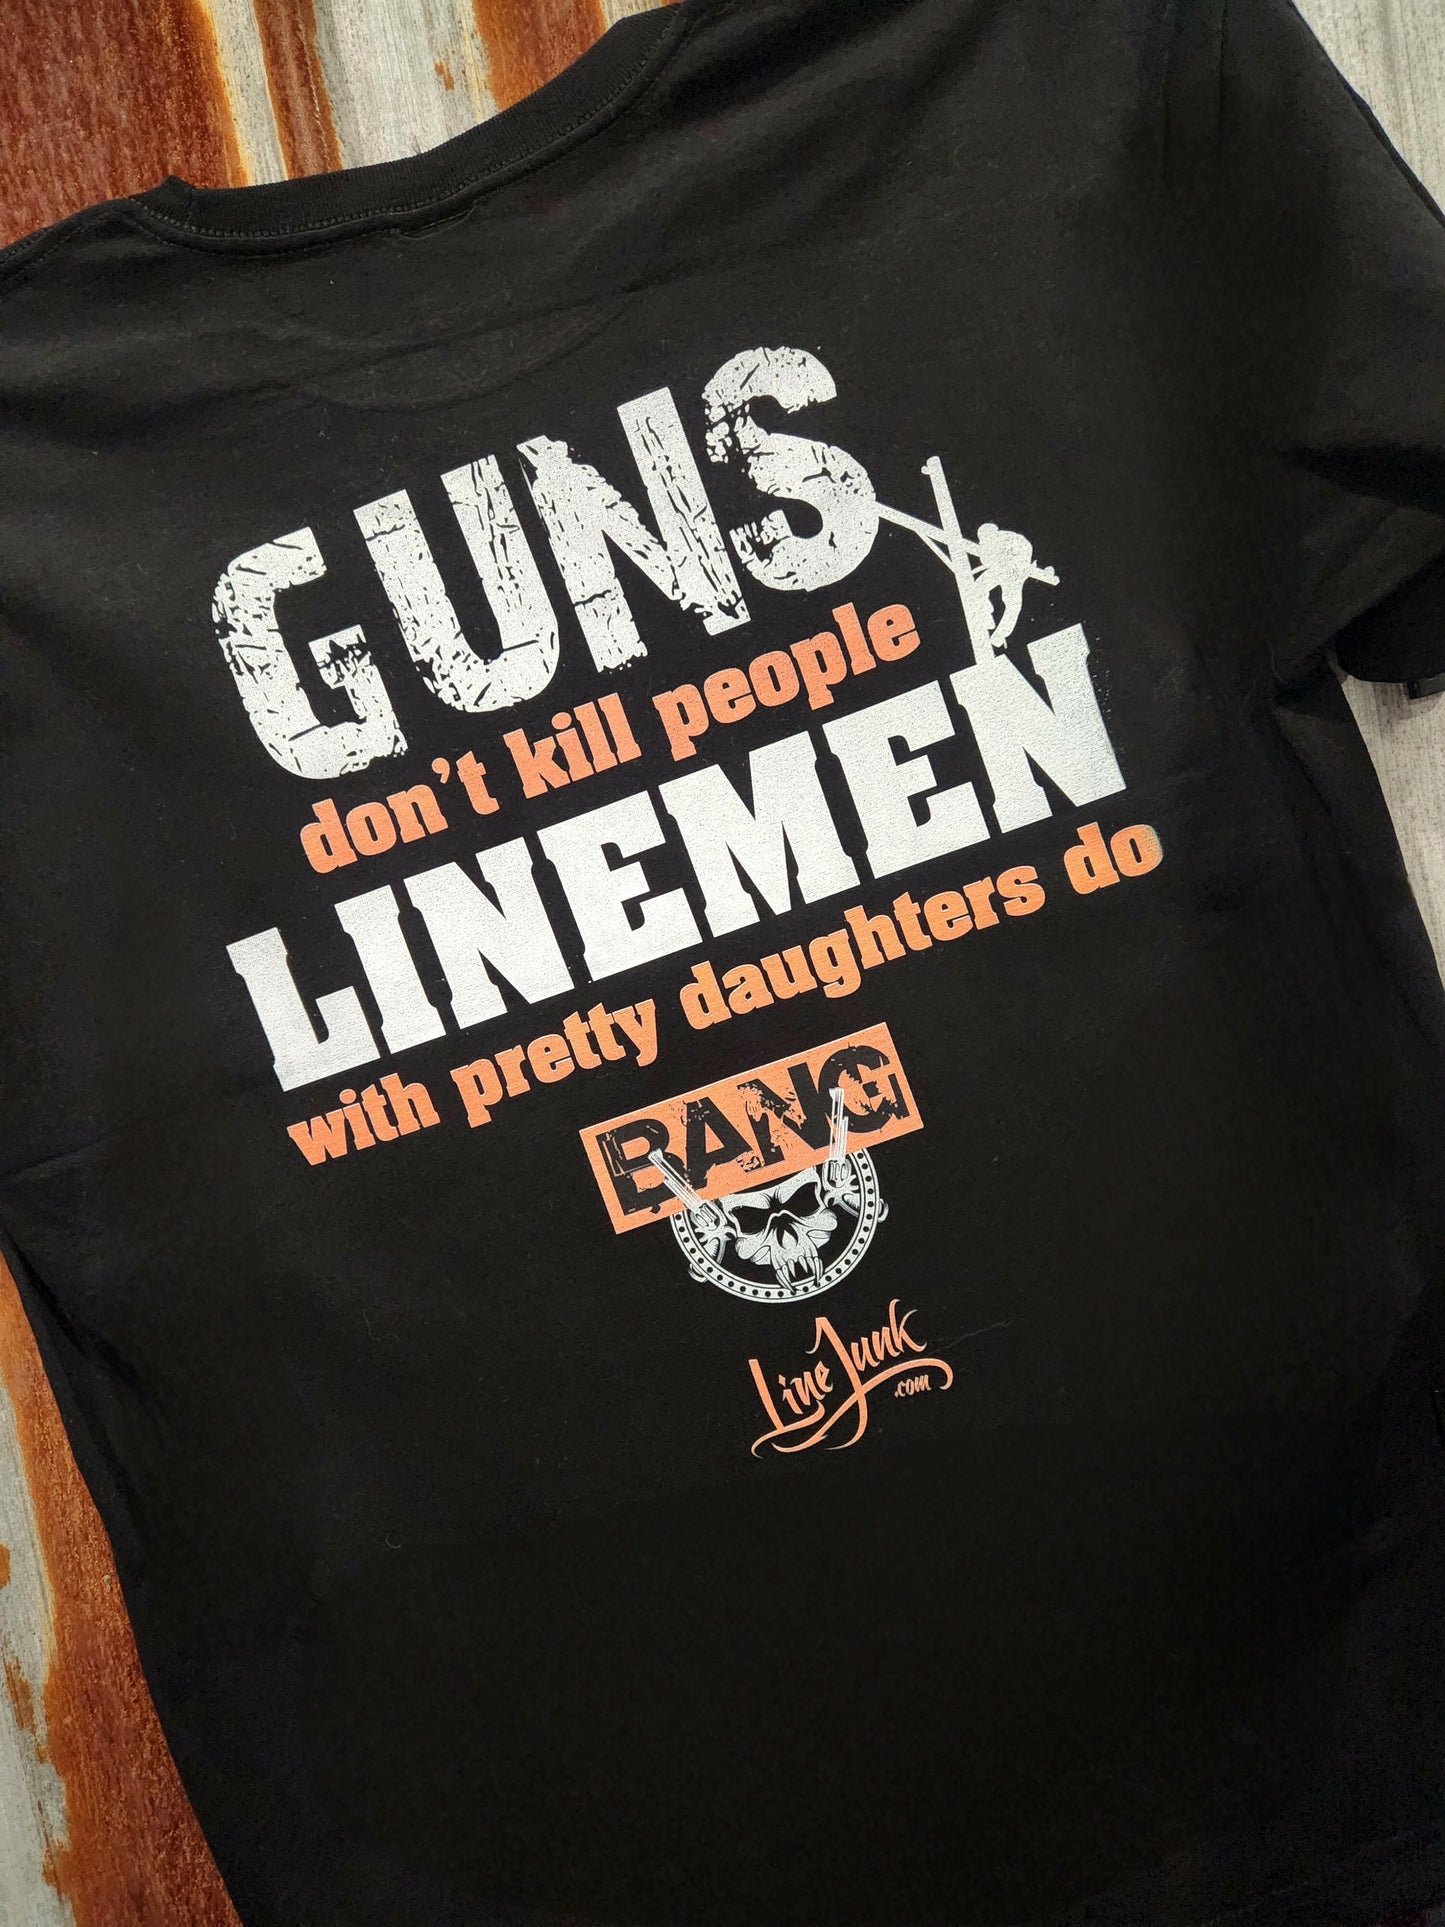 Guns Don't